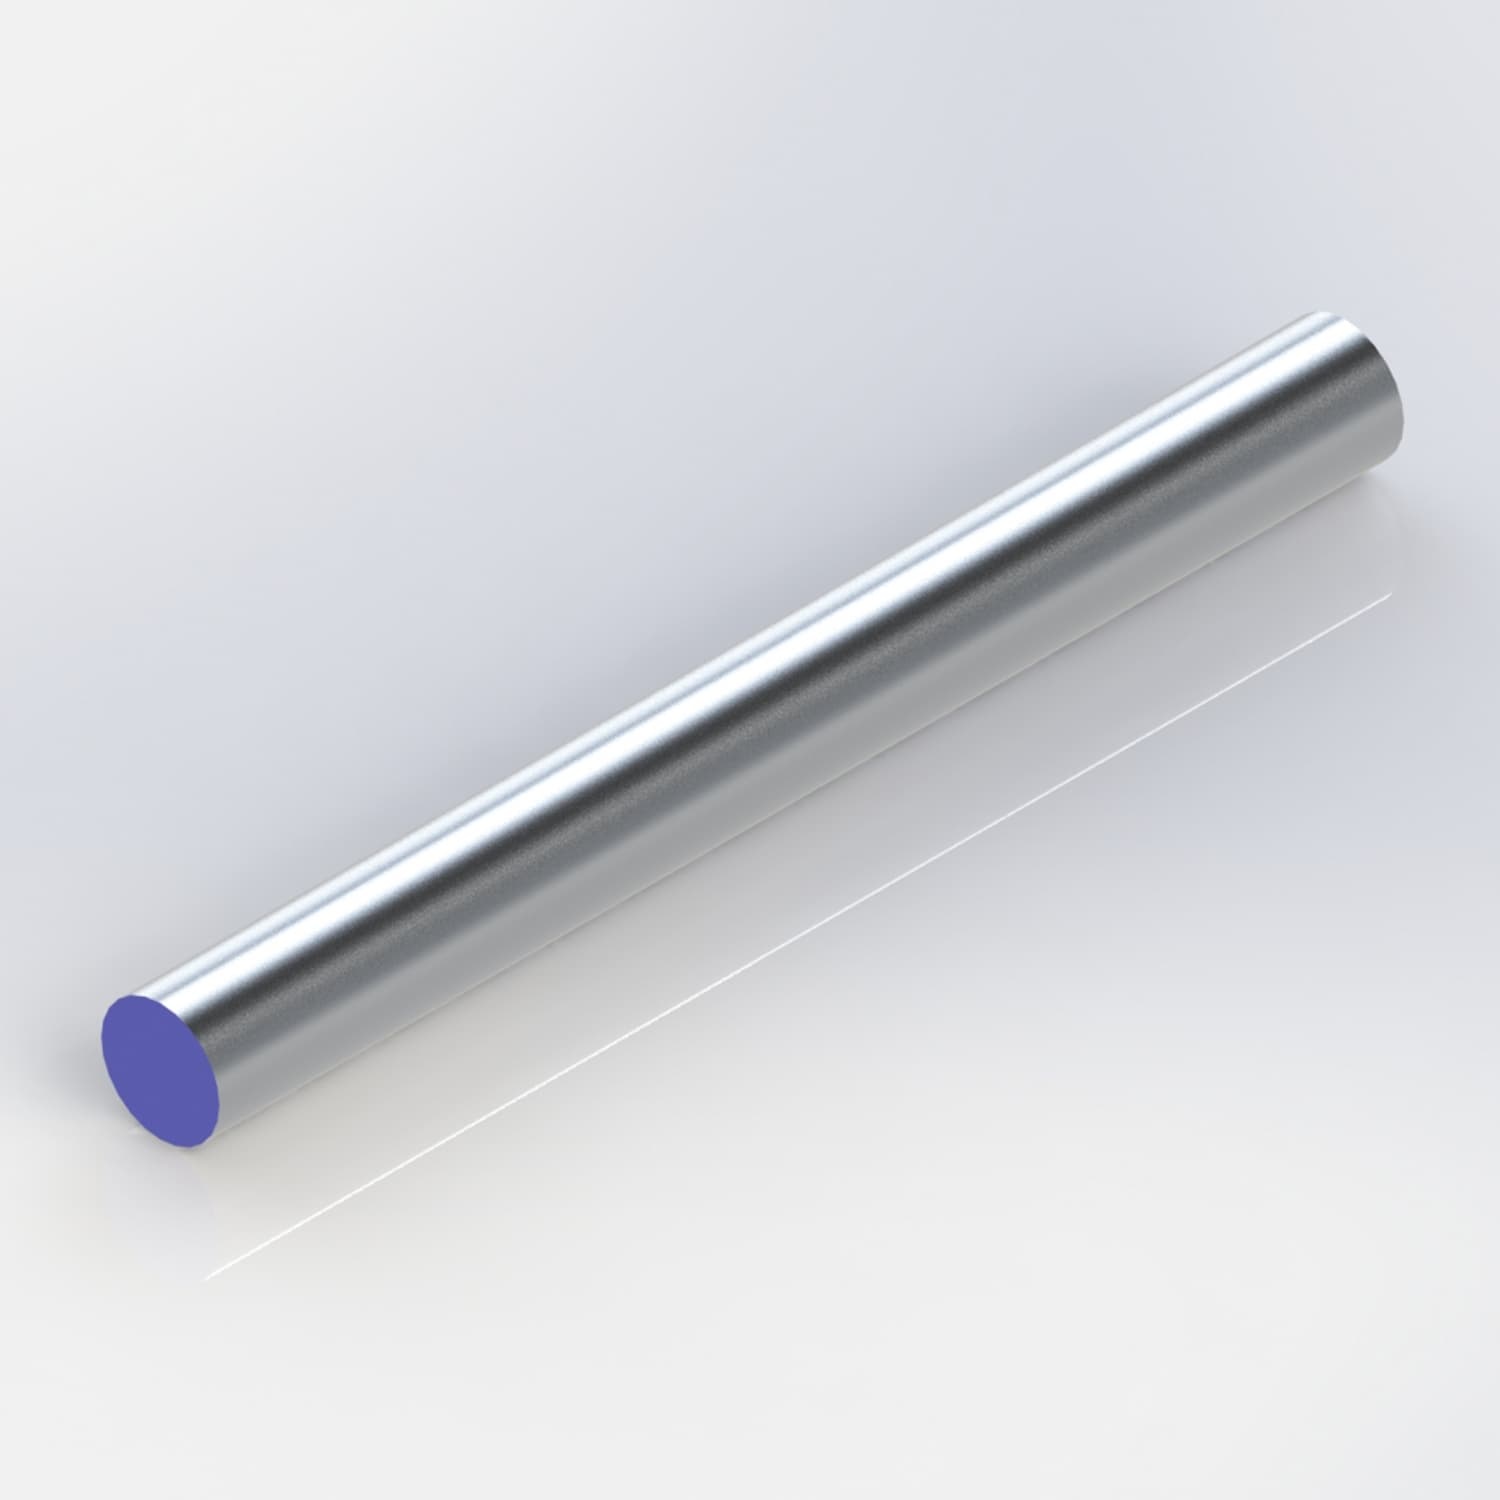  Staf aluminium rond - 10 mm massief - AL staaf - as - rondstaf van brut - blank - onbehandeld - ruw ALU